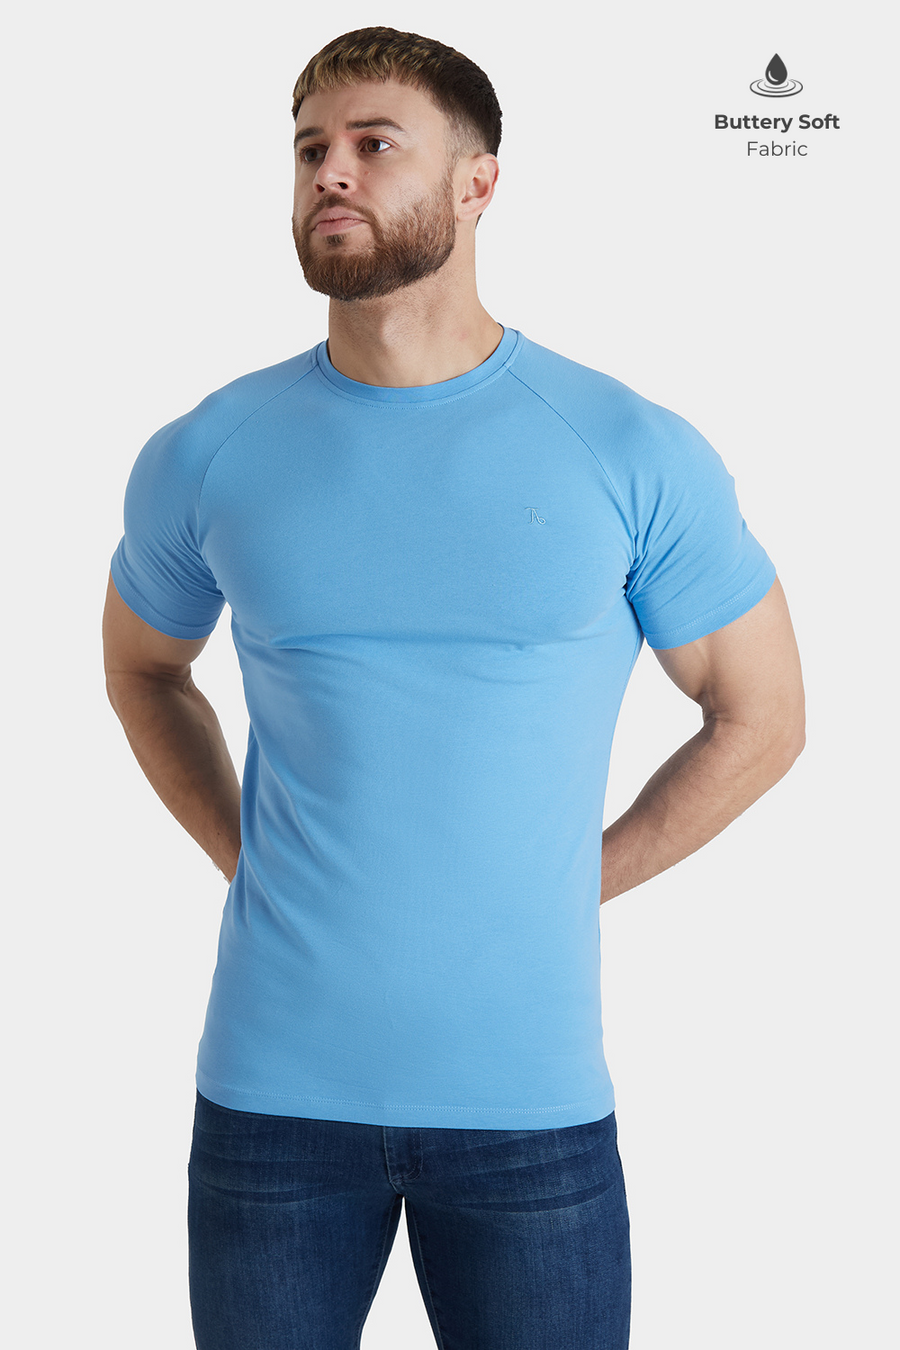 Premium Athletic Fit T-Shirt in Cornflower - TAILORED ATHLETE - USA